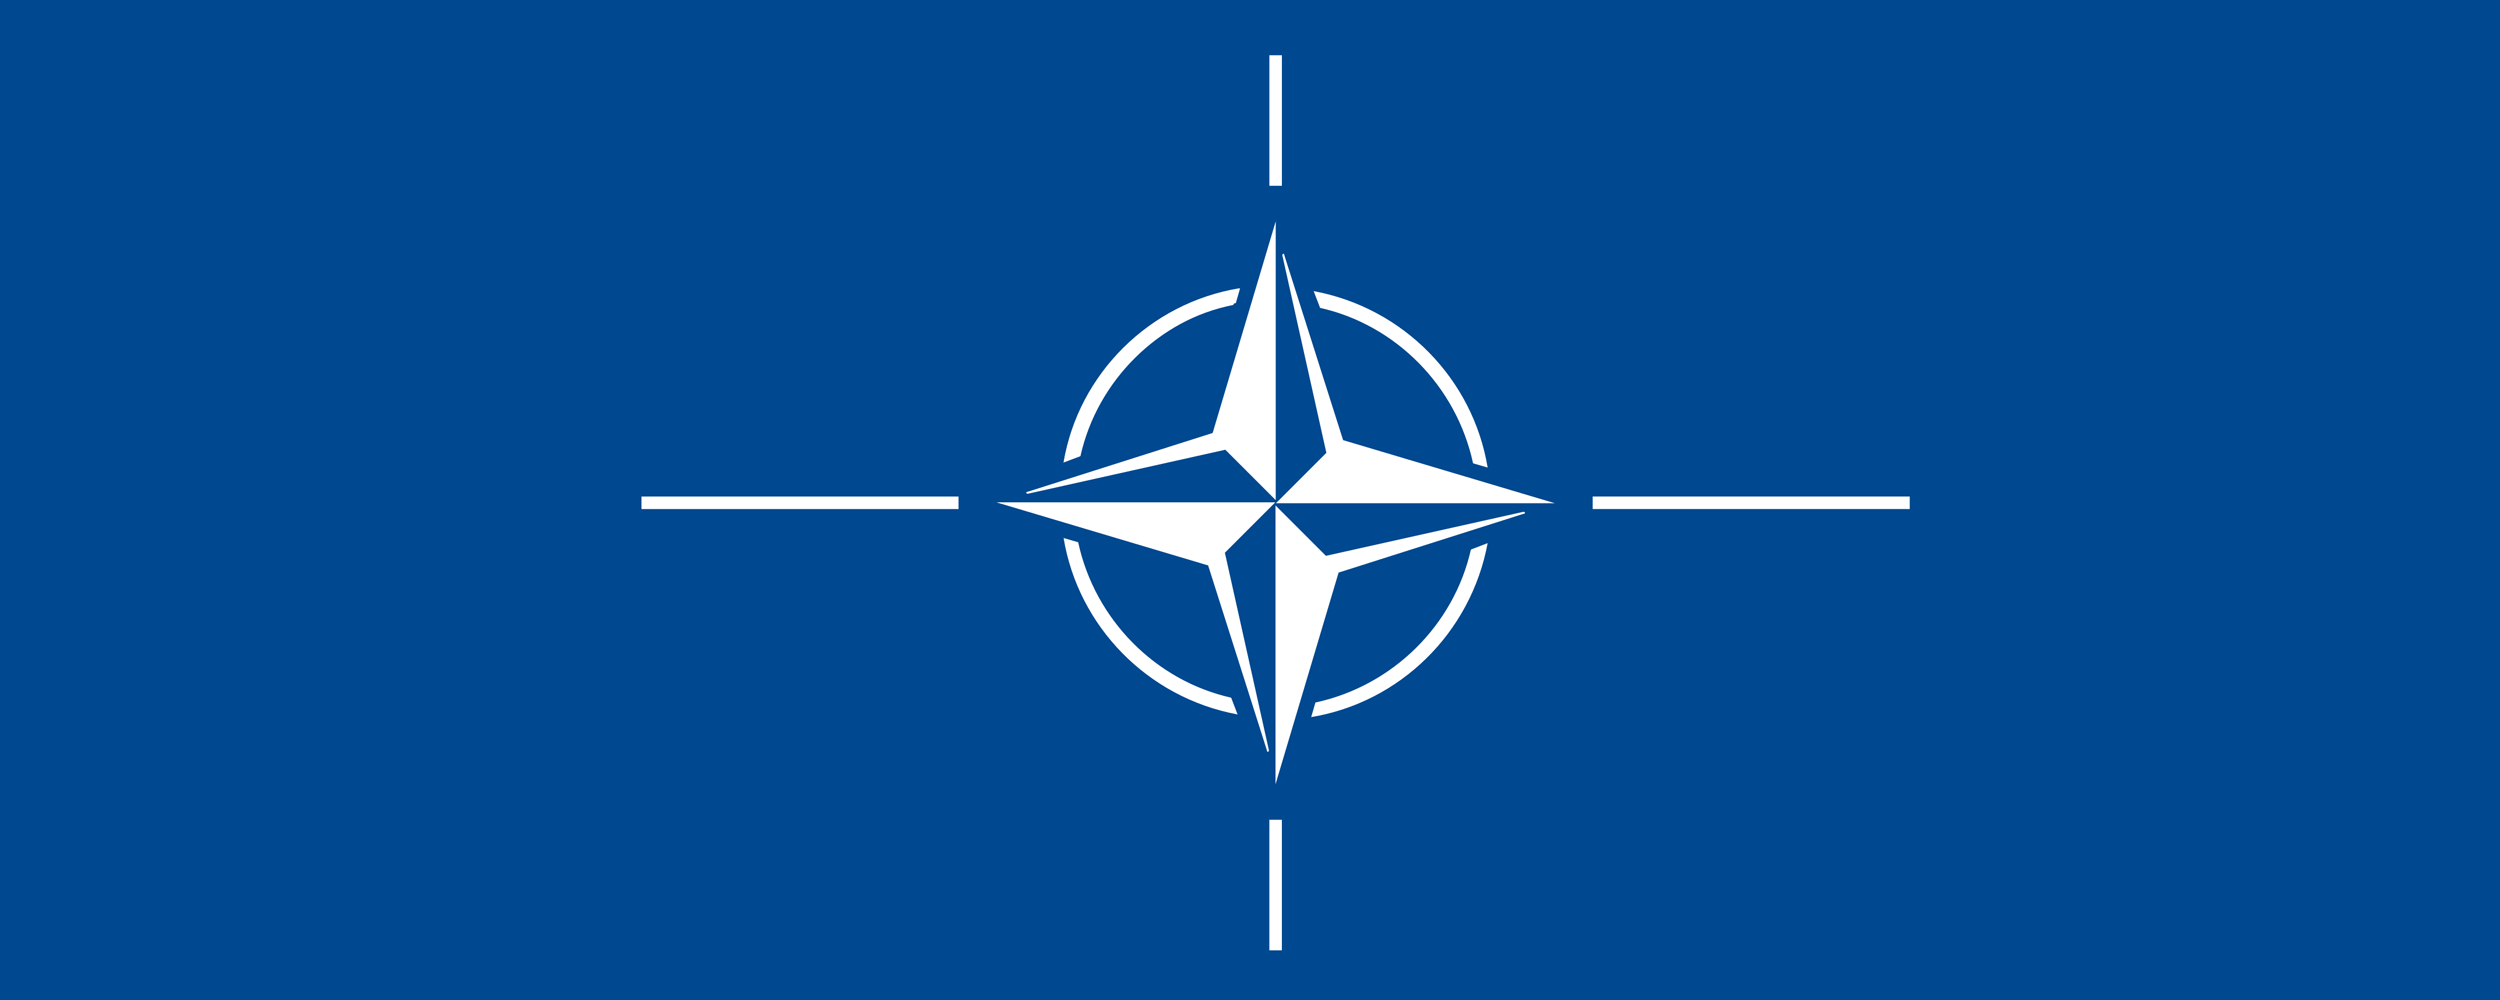 Natos emblem